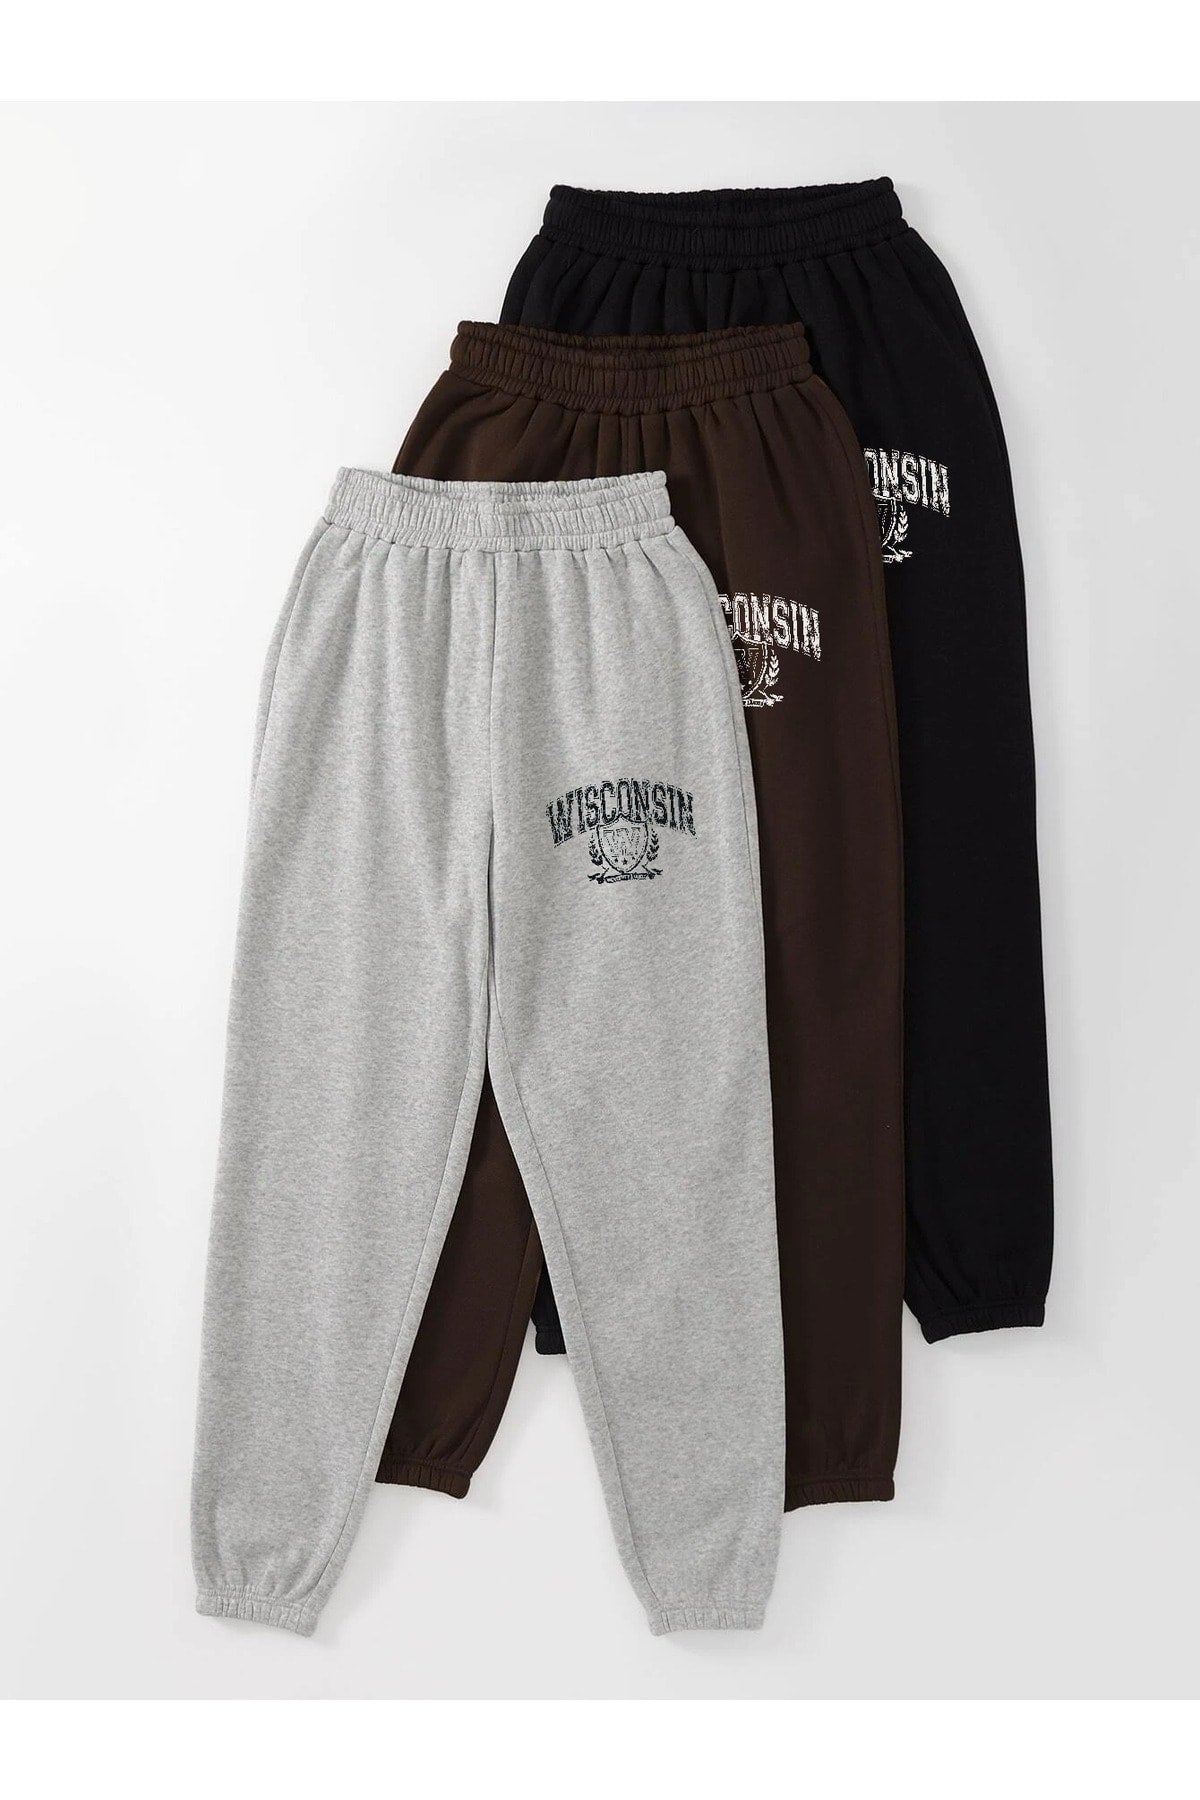 3-pack Wisconsin Printed Jogger Sweatpants - Black Gray And Brown Elastic Leg High Waist Summer